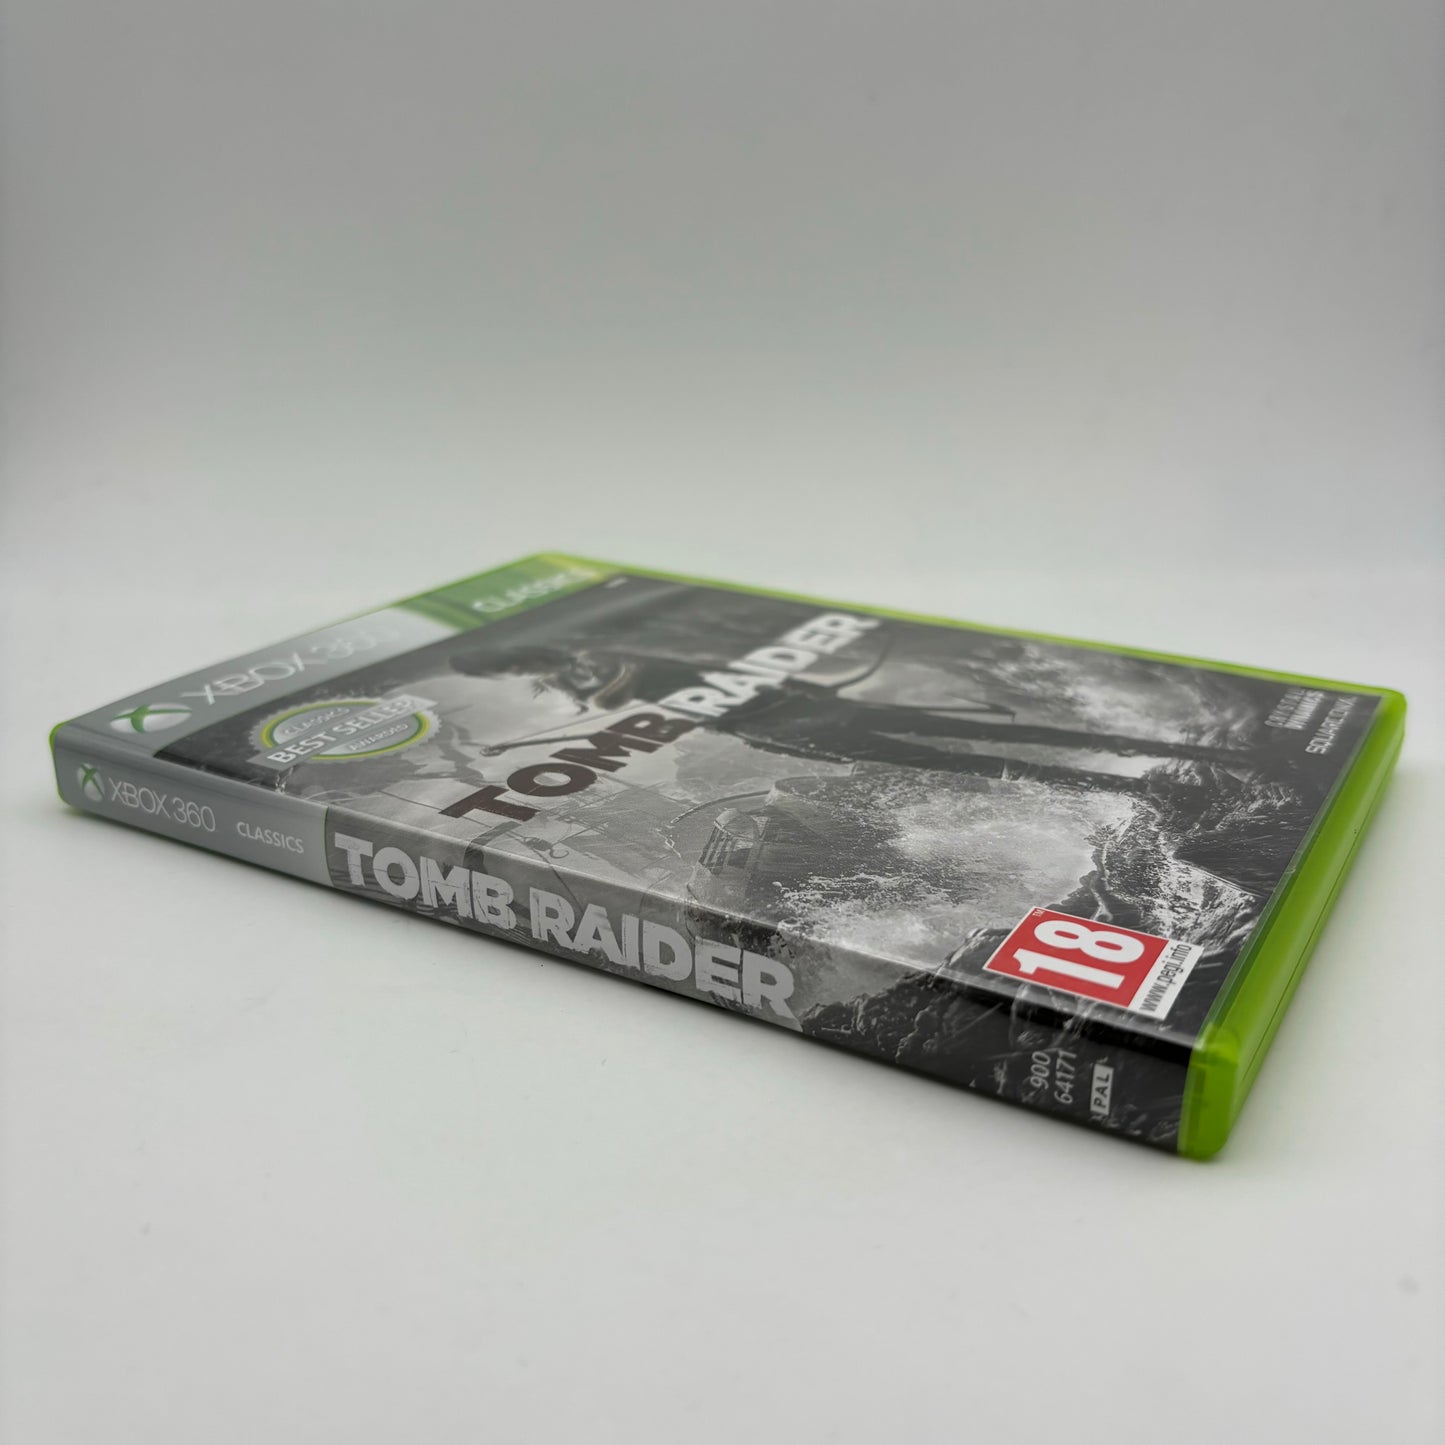 Tomb Raider (2013) Xbox 360 Pal Ita Classics (USATO)